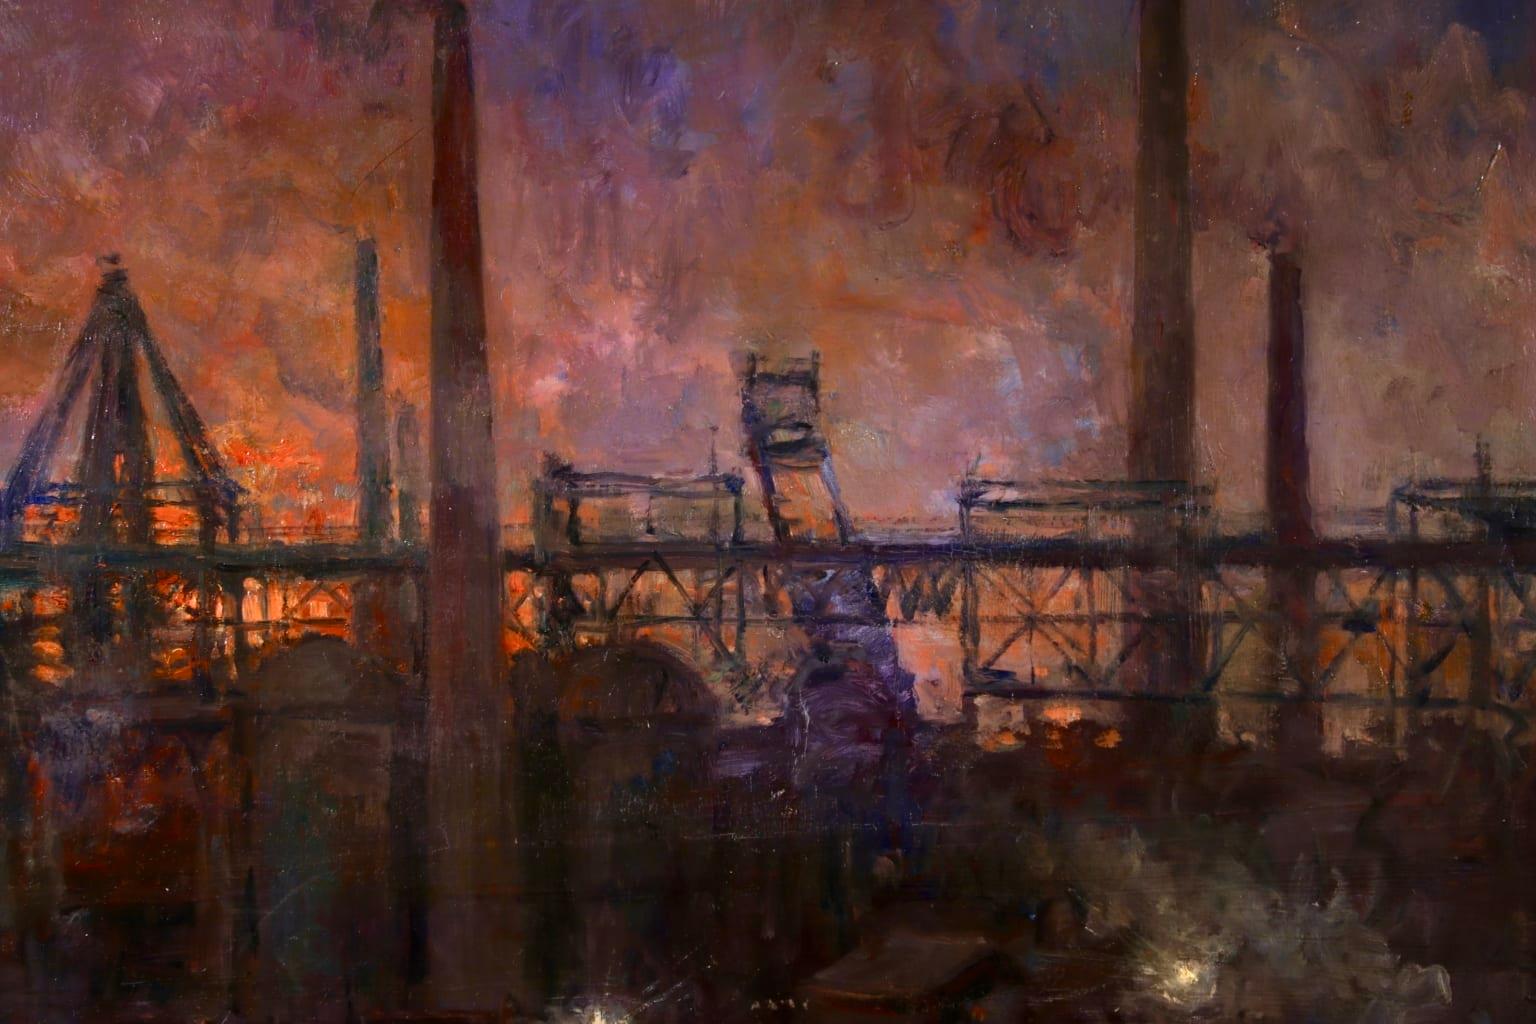 Blast Furnaces - Night - Realist Oil, Industrial Cityscape by Oswald Poreau 8